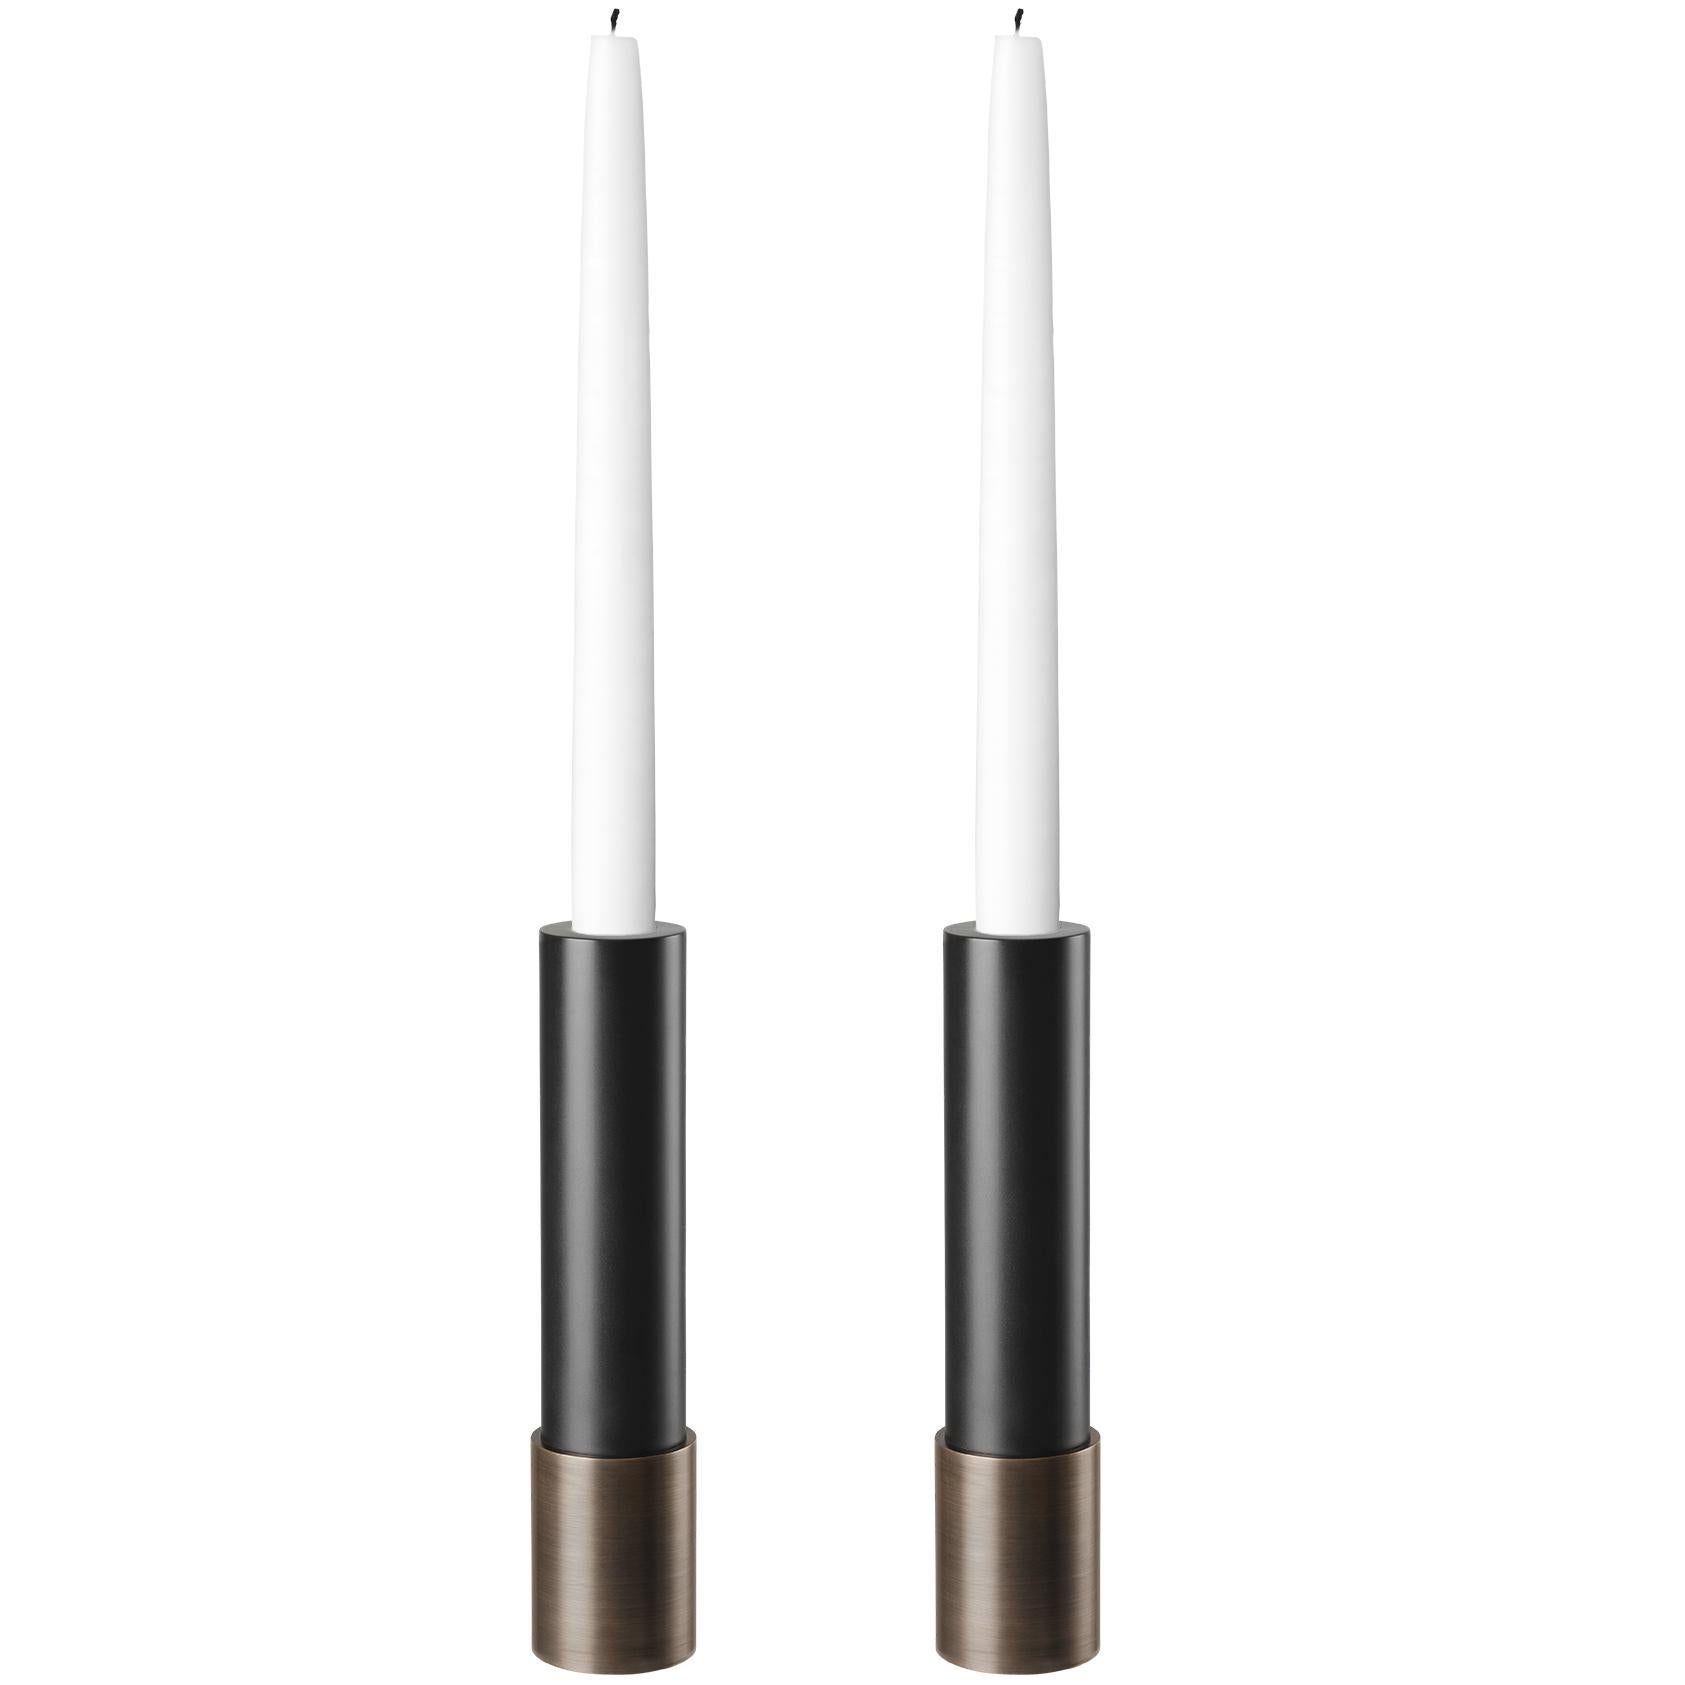 Pair of Candlesticks Model #12 by Space Copenhagen for Gubi For Sale 9